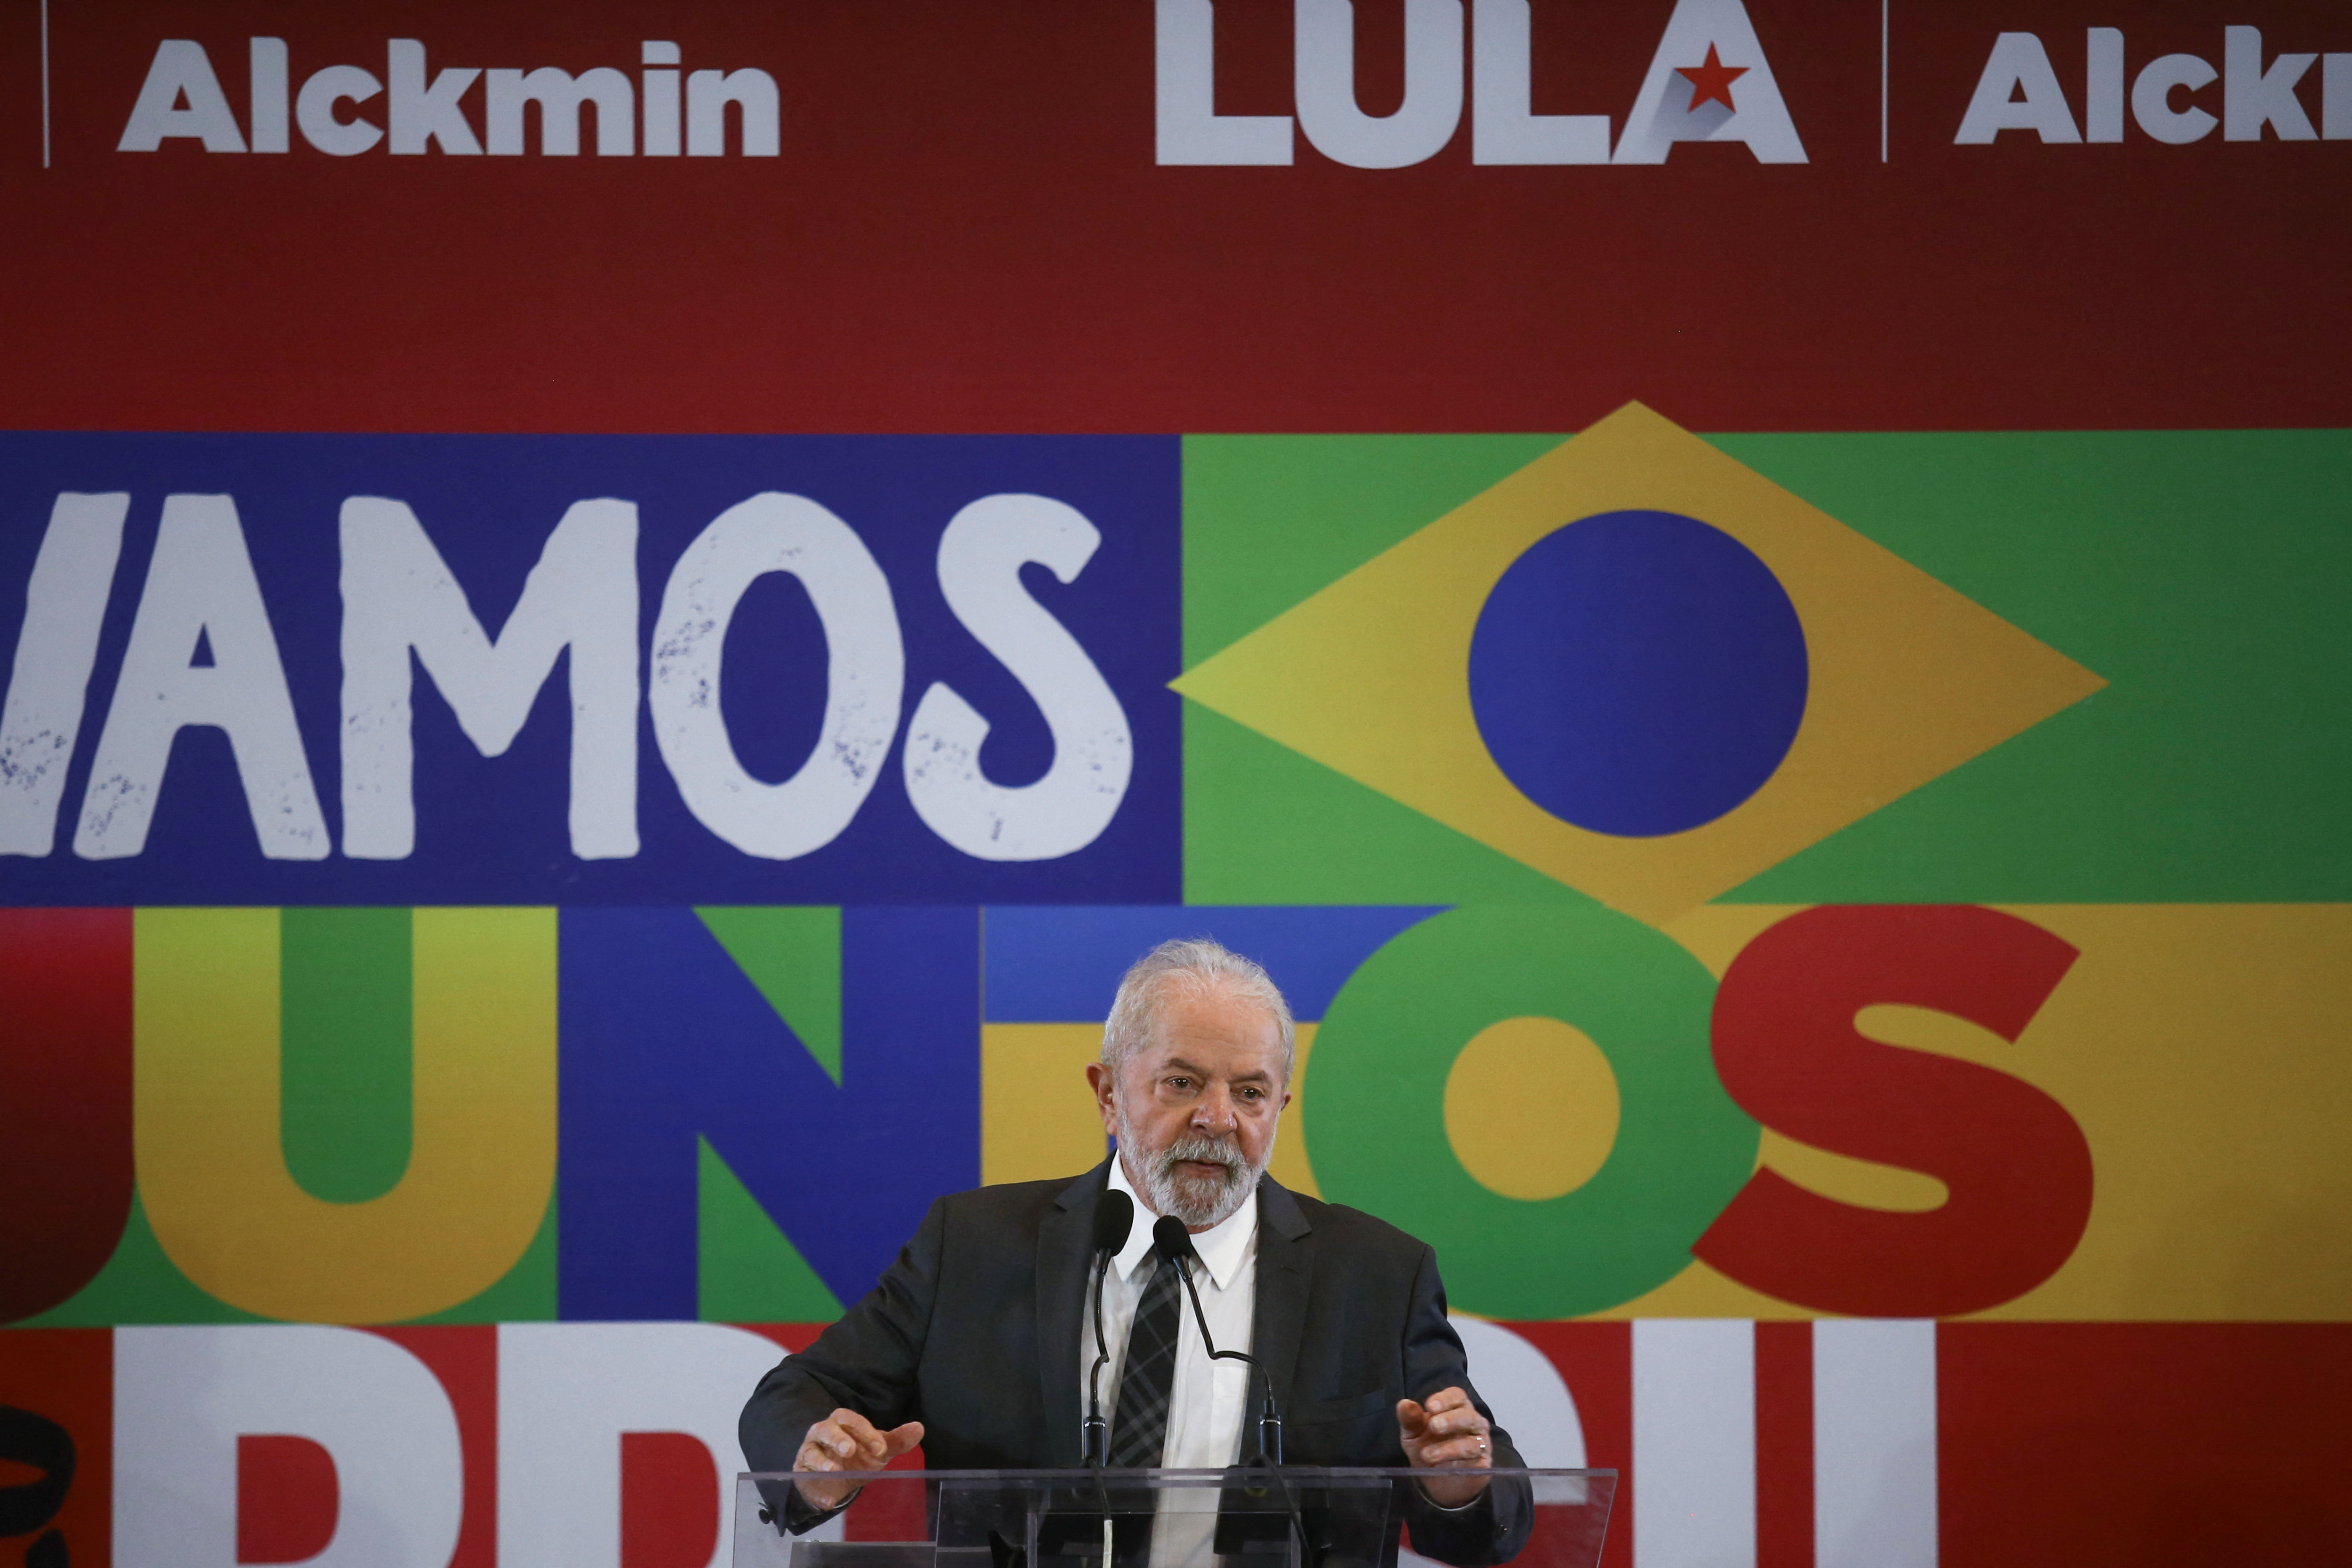 Former Brazil's President Lula speaks in Sao Paulo